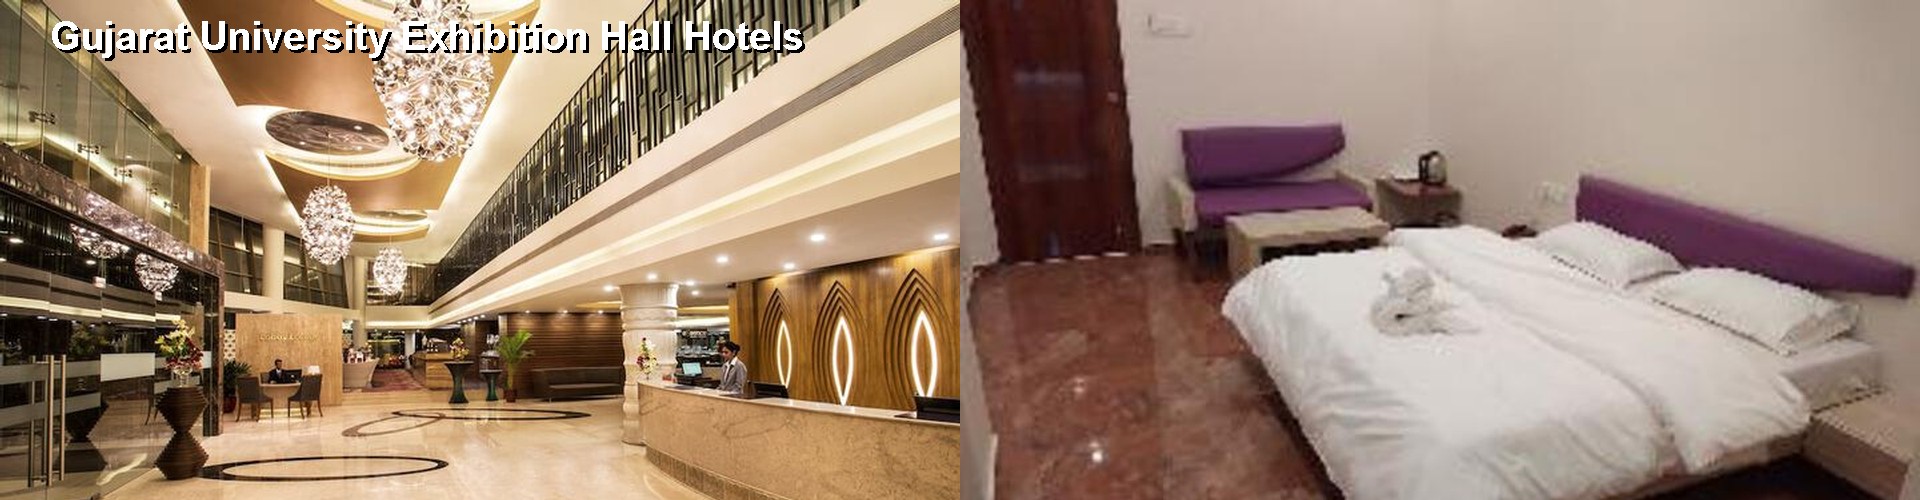 5 Best Hotels near Gujarat University Exhibition Hall